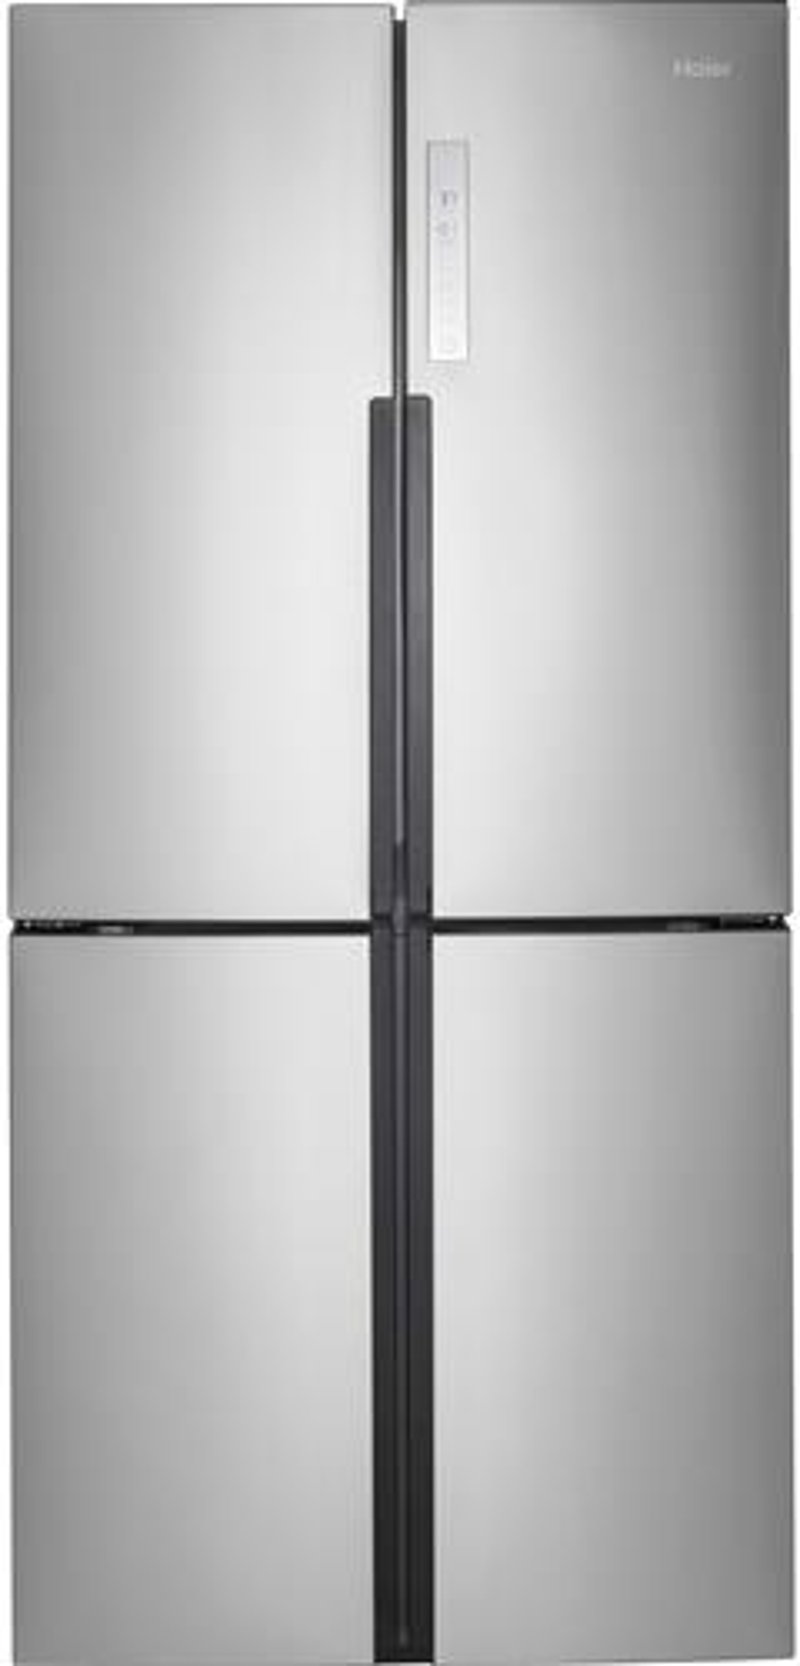 Haier best refrigerator deals